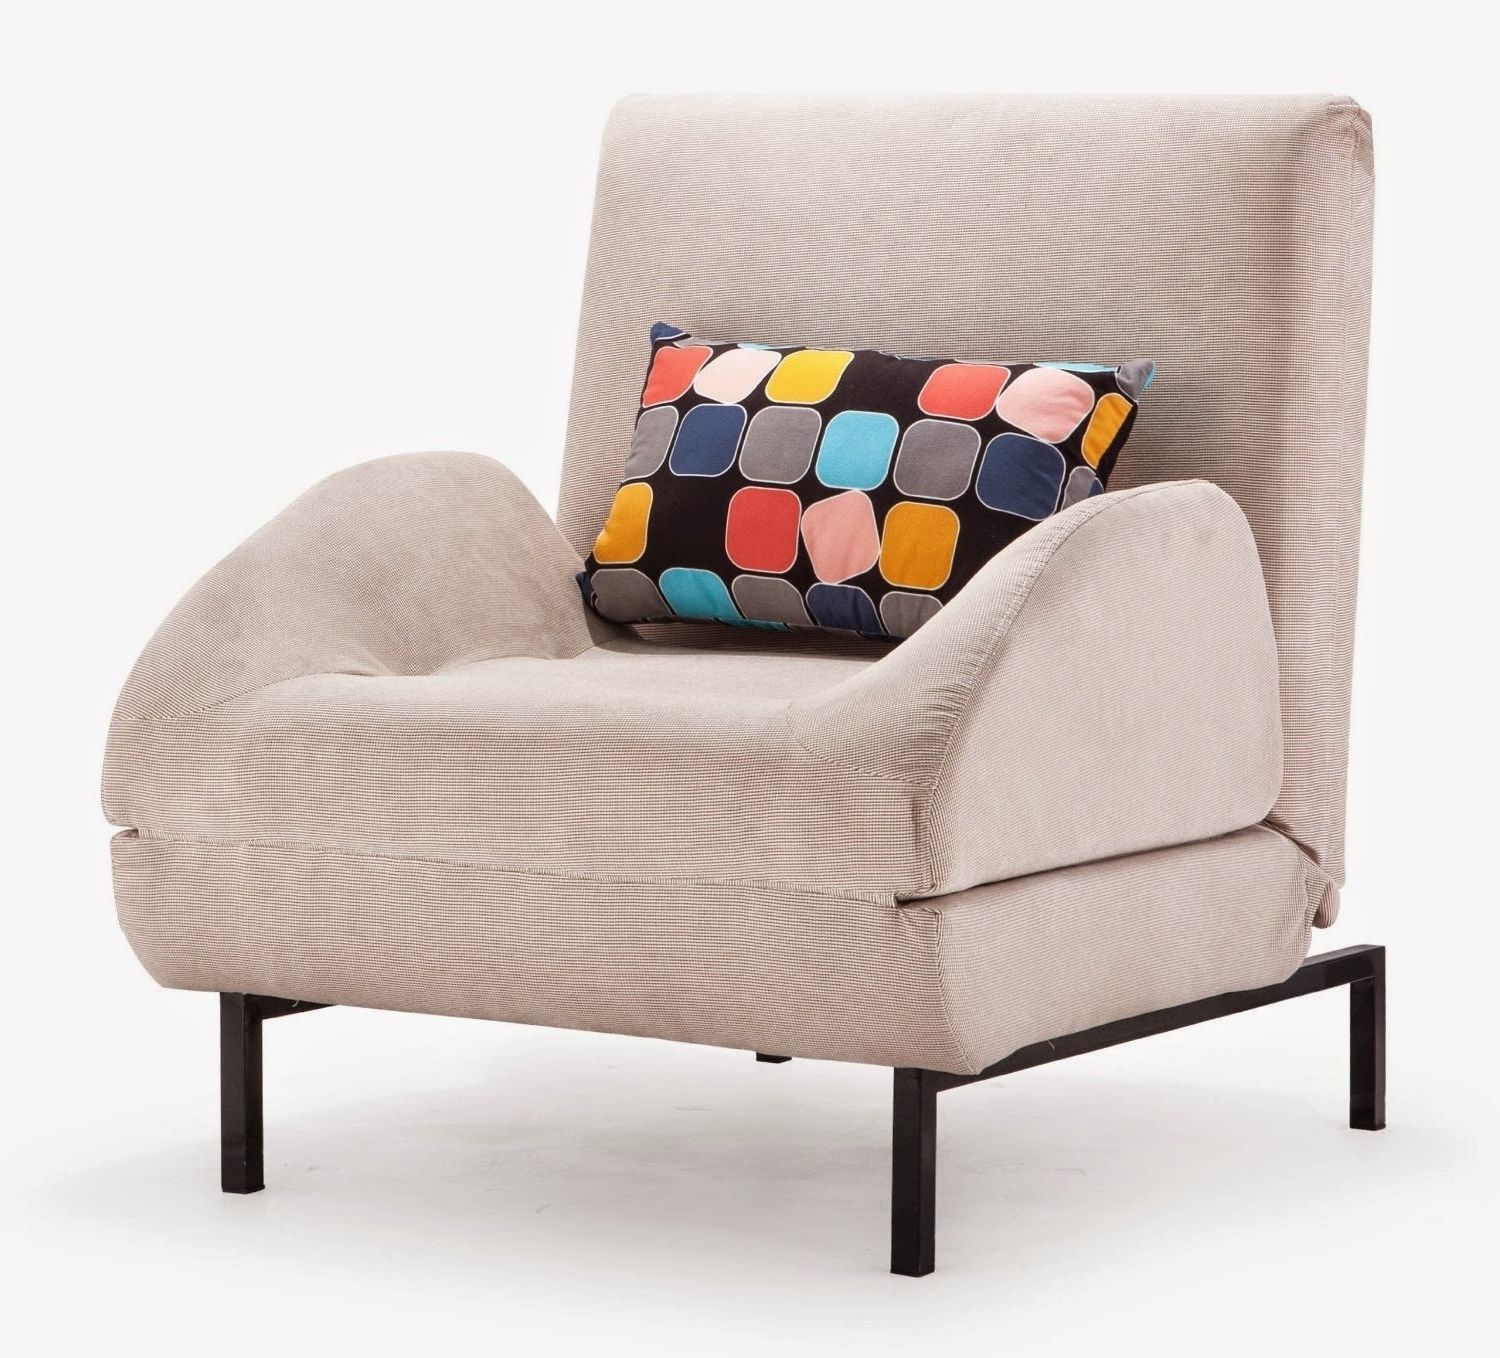 Twin Sleeper Sofa Chairs With Most Popular Stunning Sleeper Chair Kids Ideas – Liltigertoo – Liltigertoo (View 11 of 20)